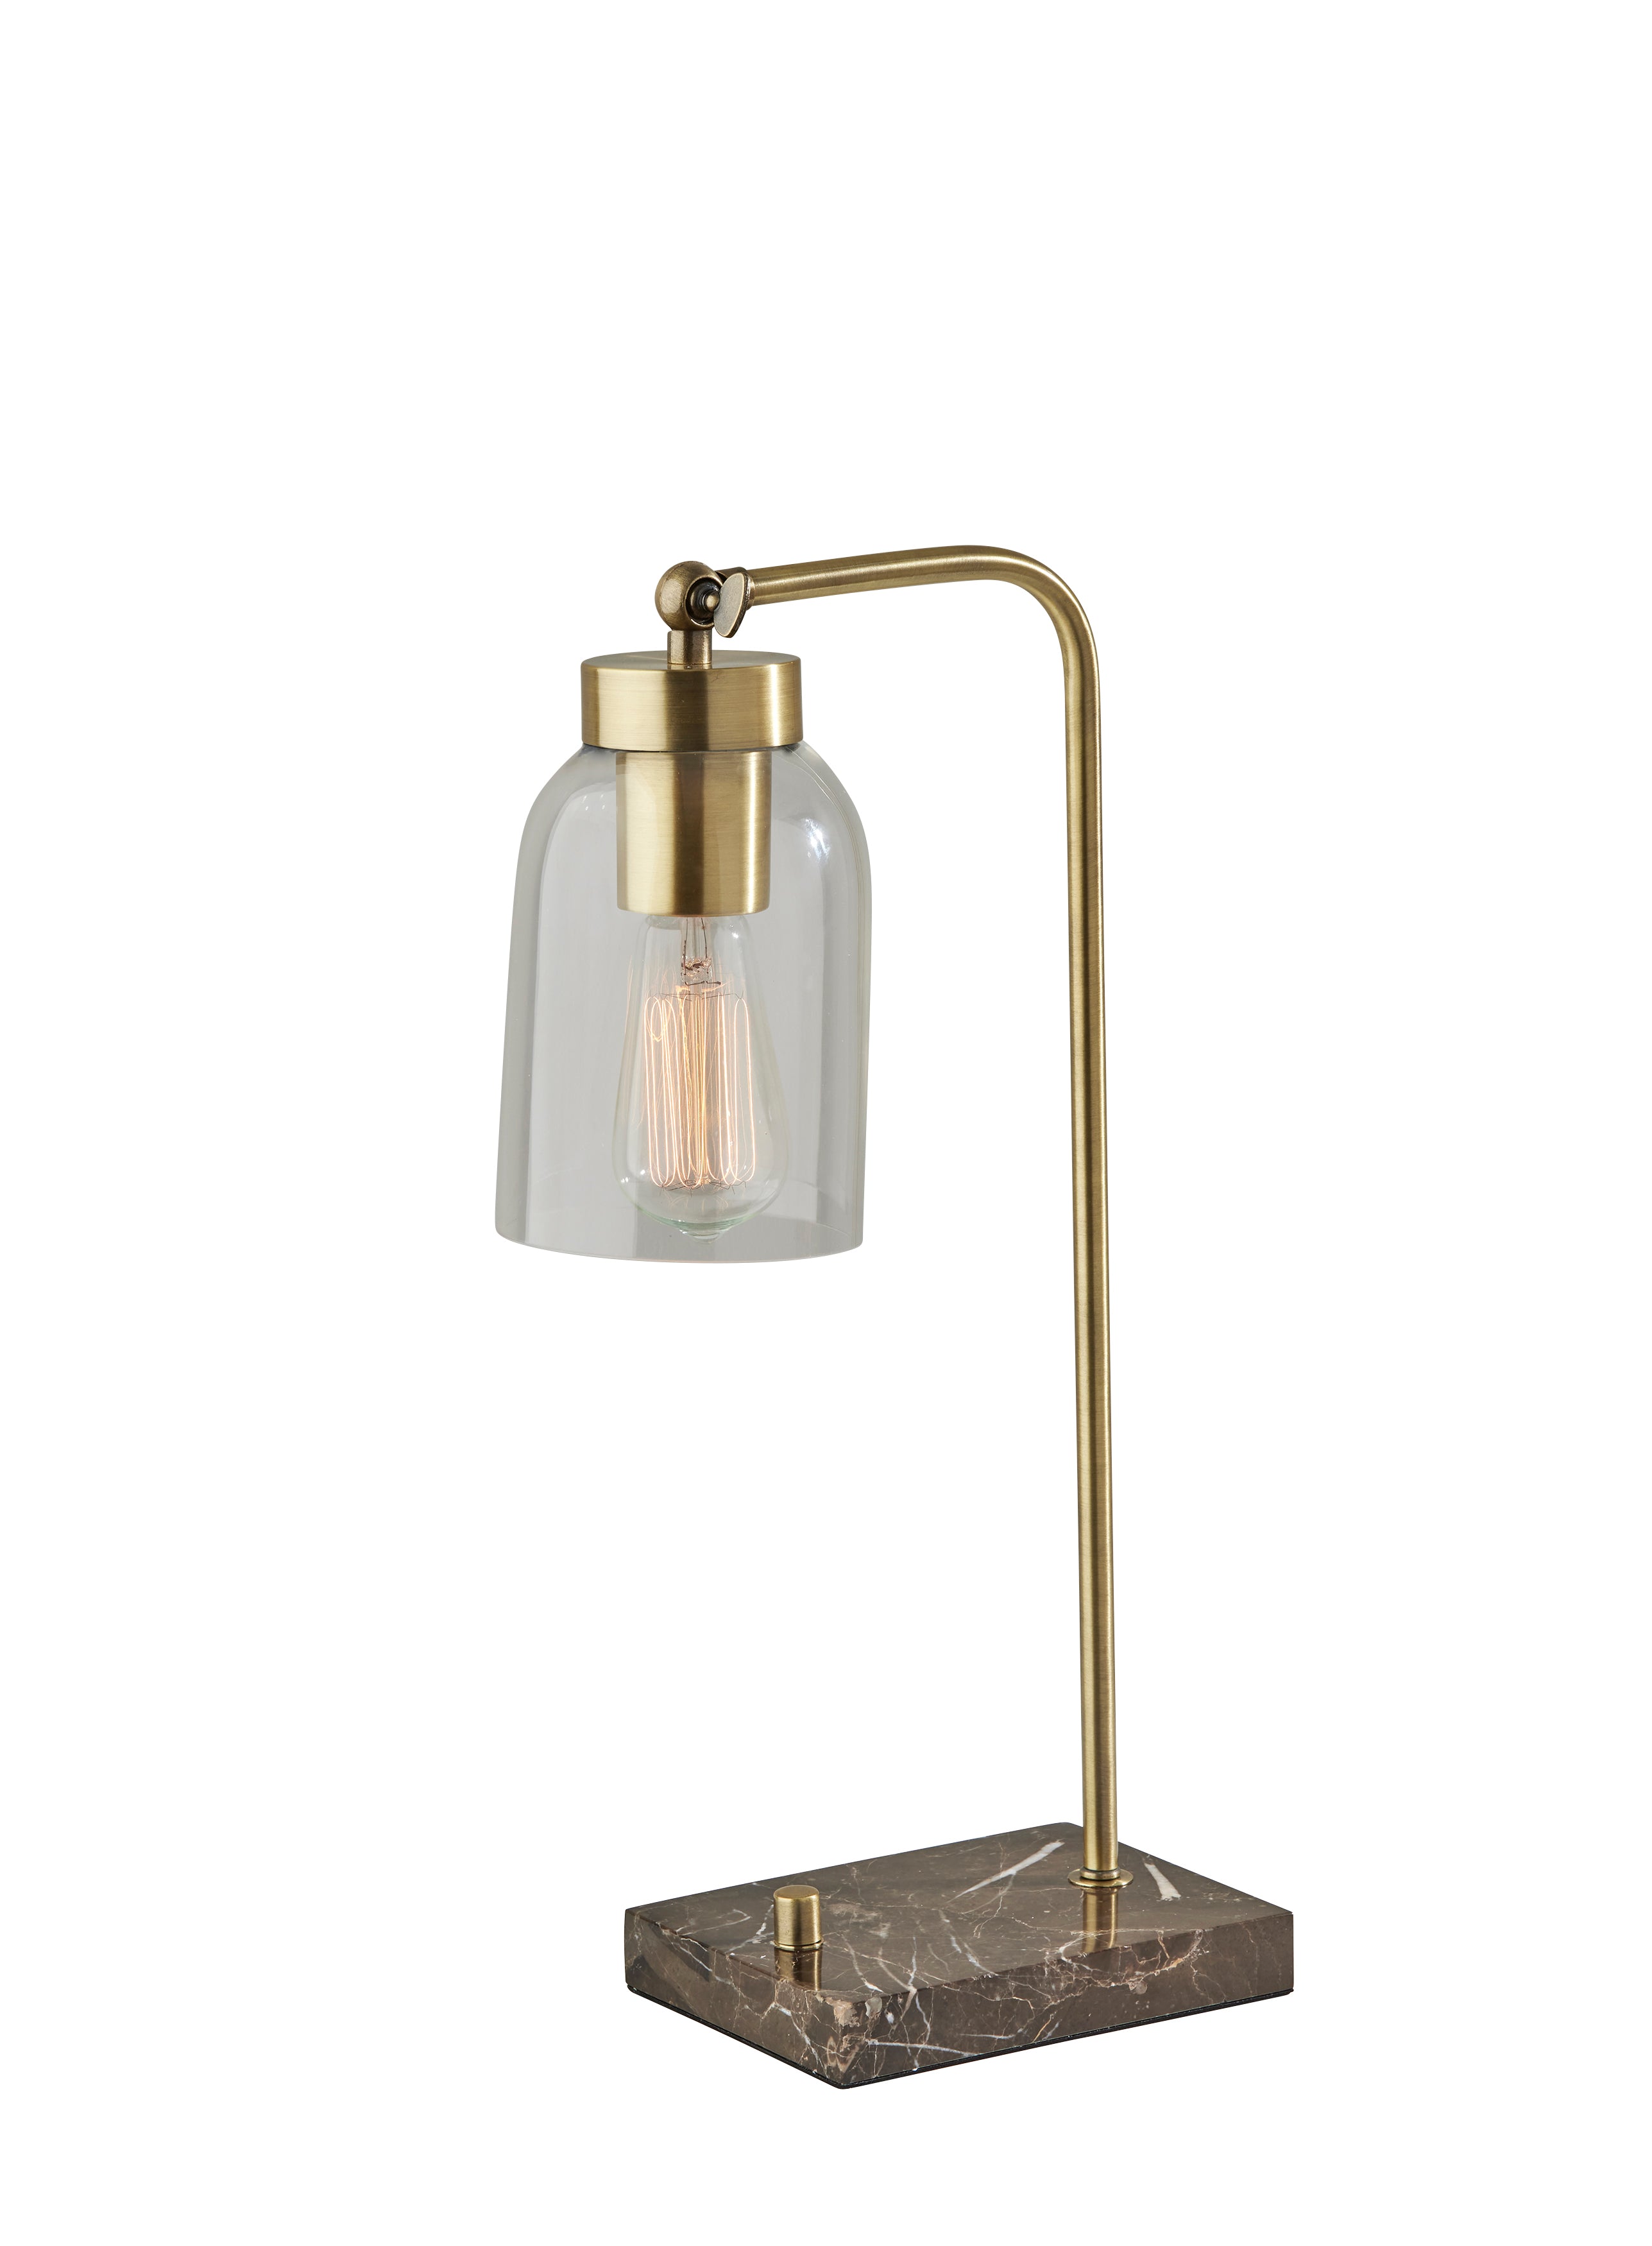 BRISTOL Lampe sur table Or - 4288-21 | ADESSO